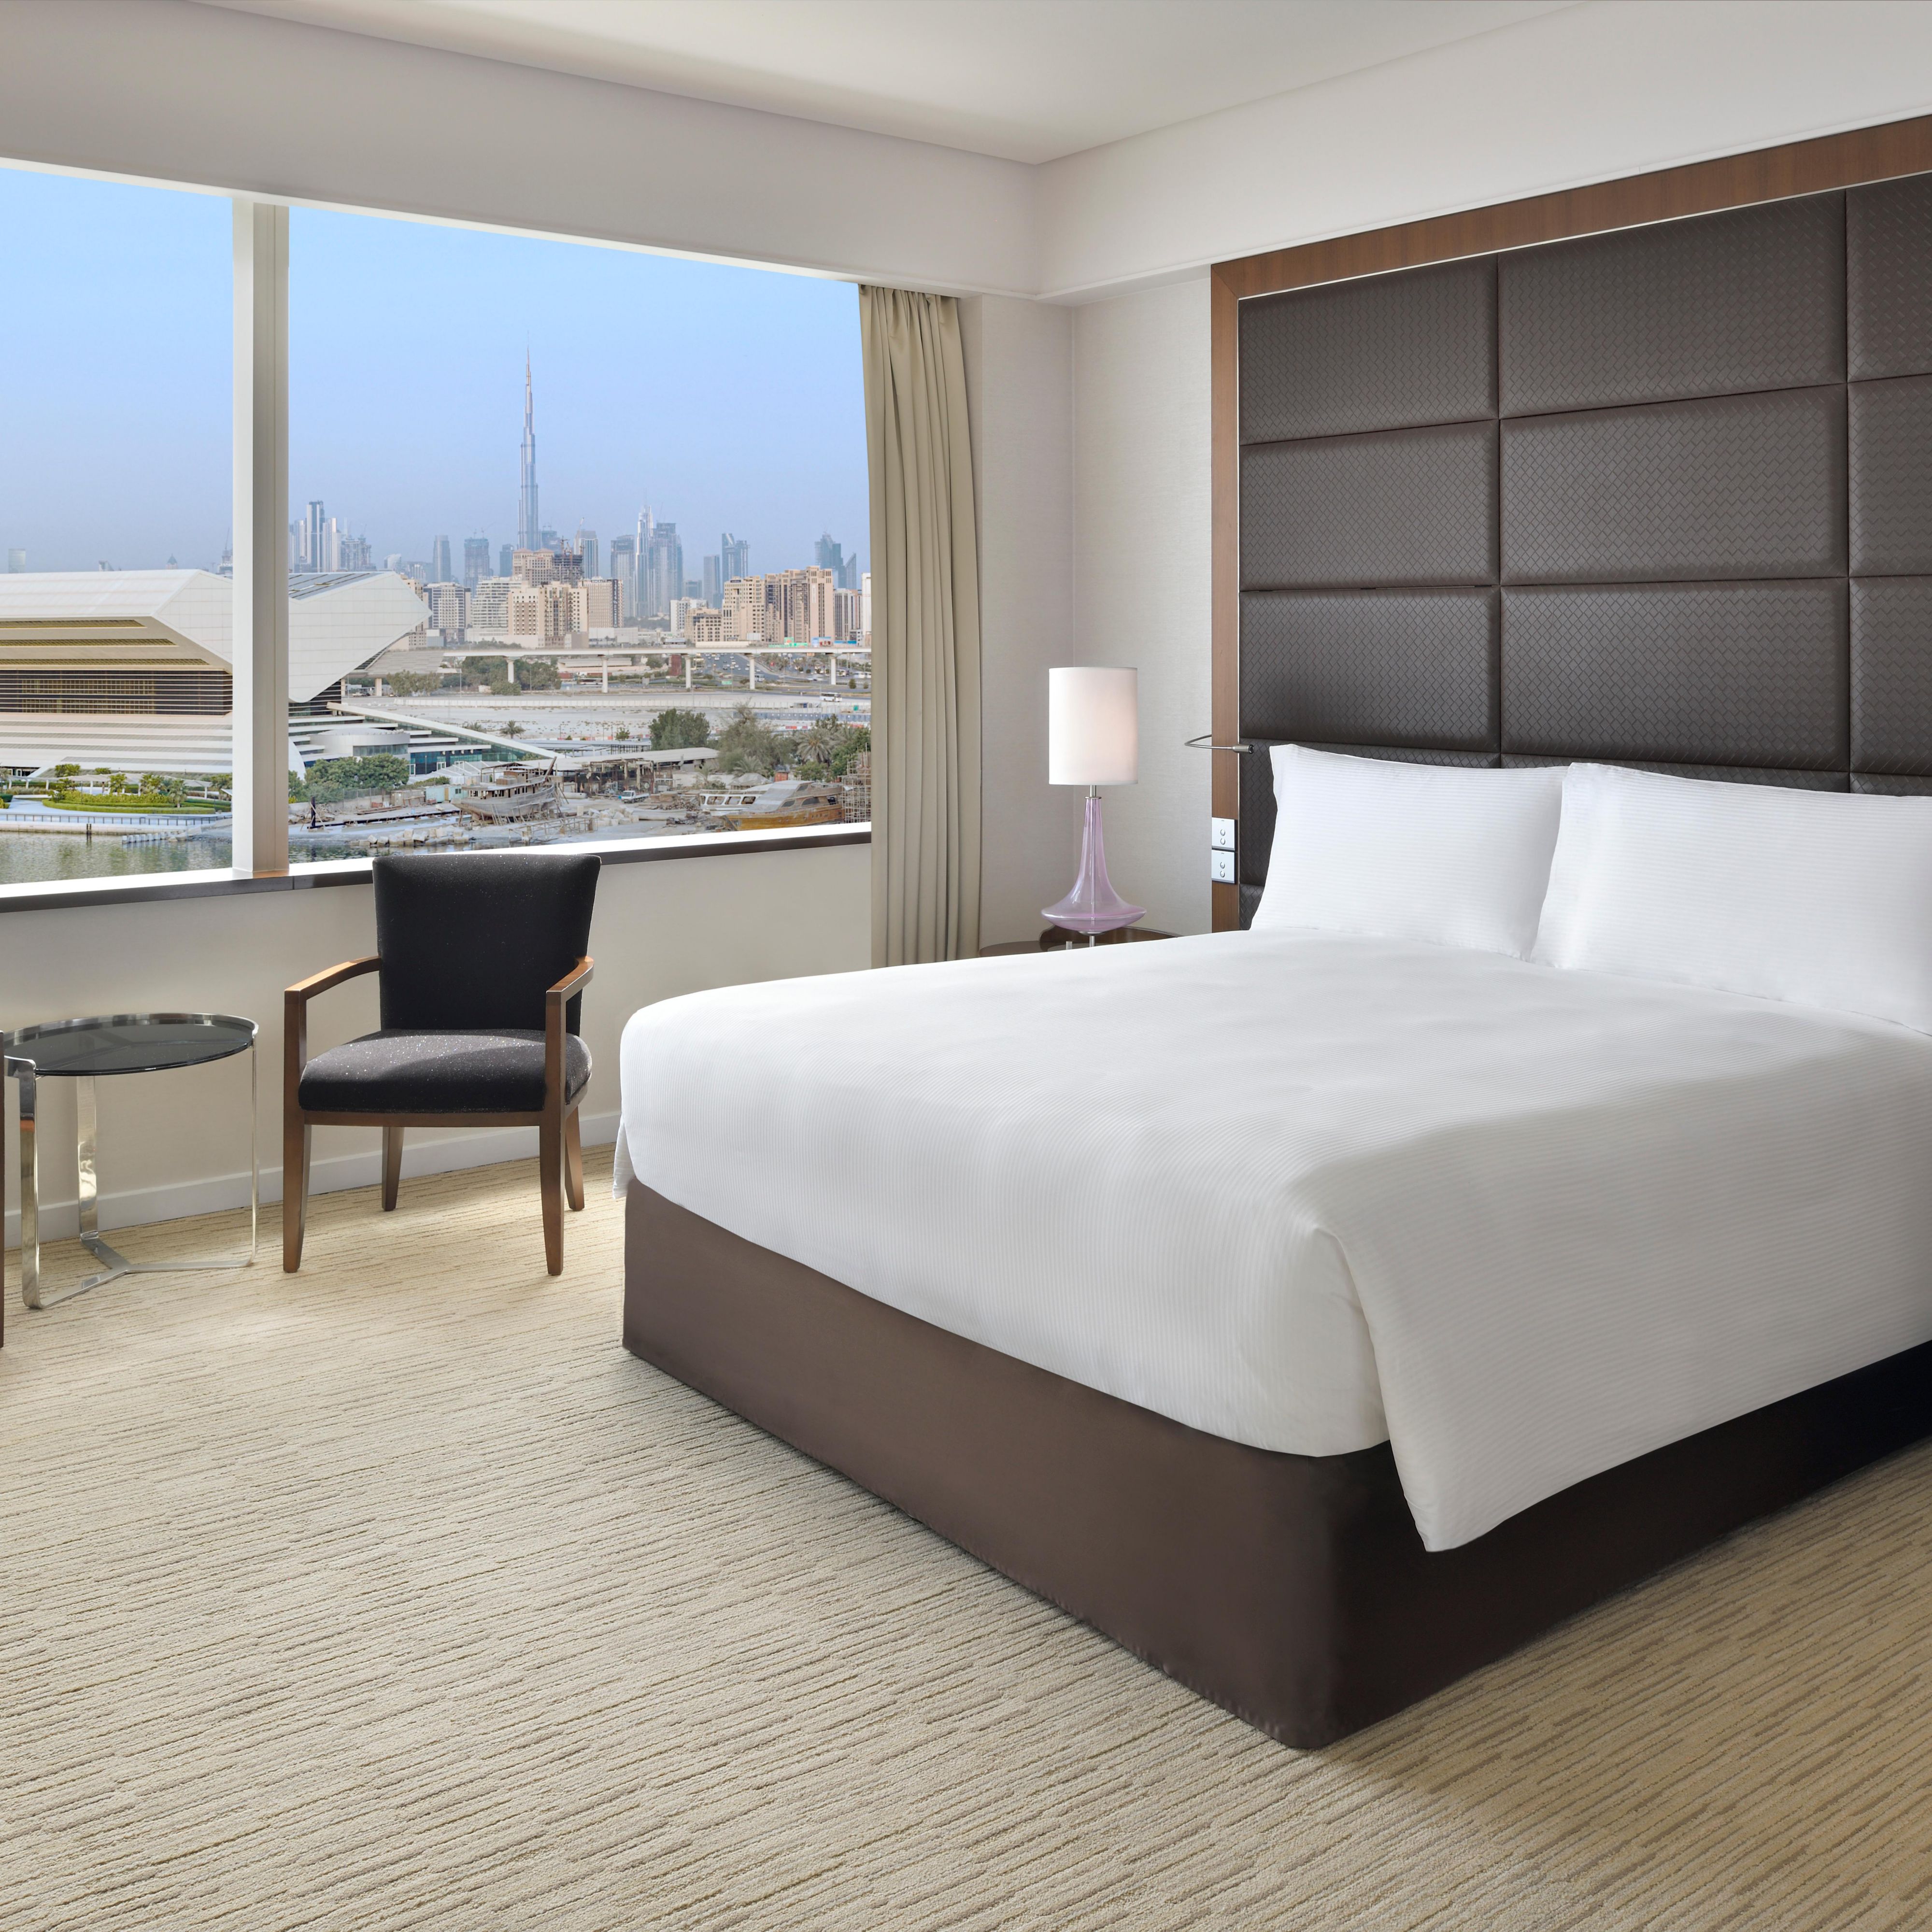 Spacious king bedroom overlooking Dubai waterfront &amp; city skyline